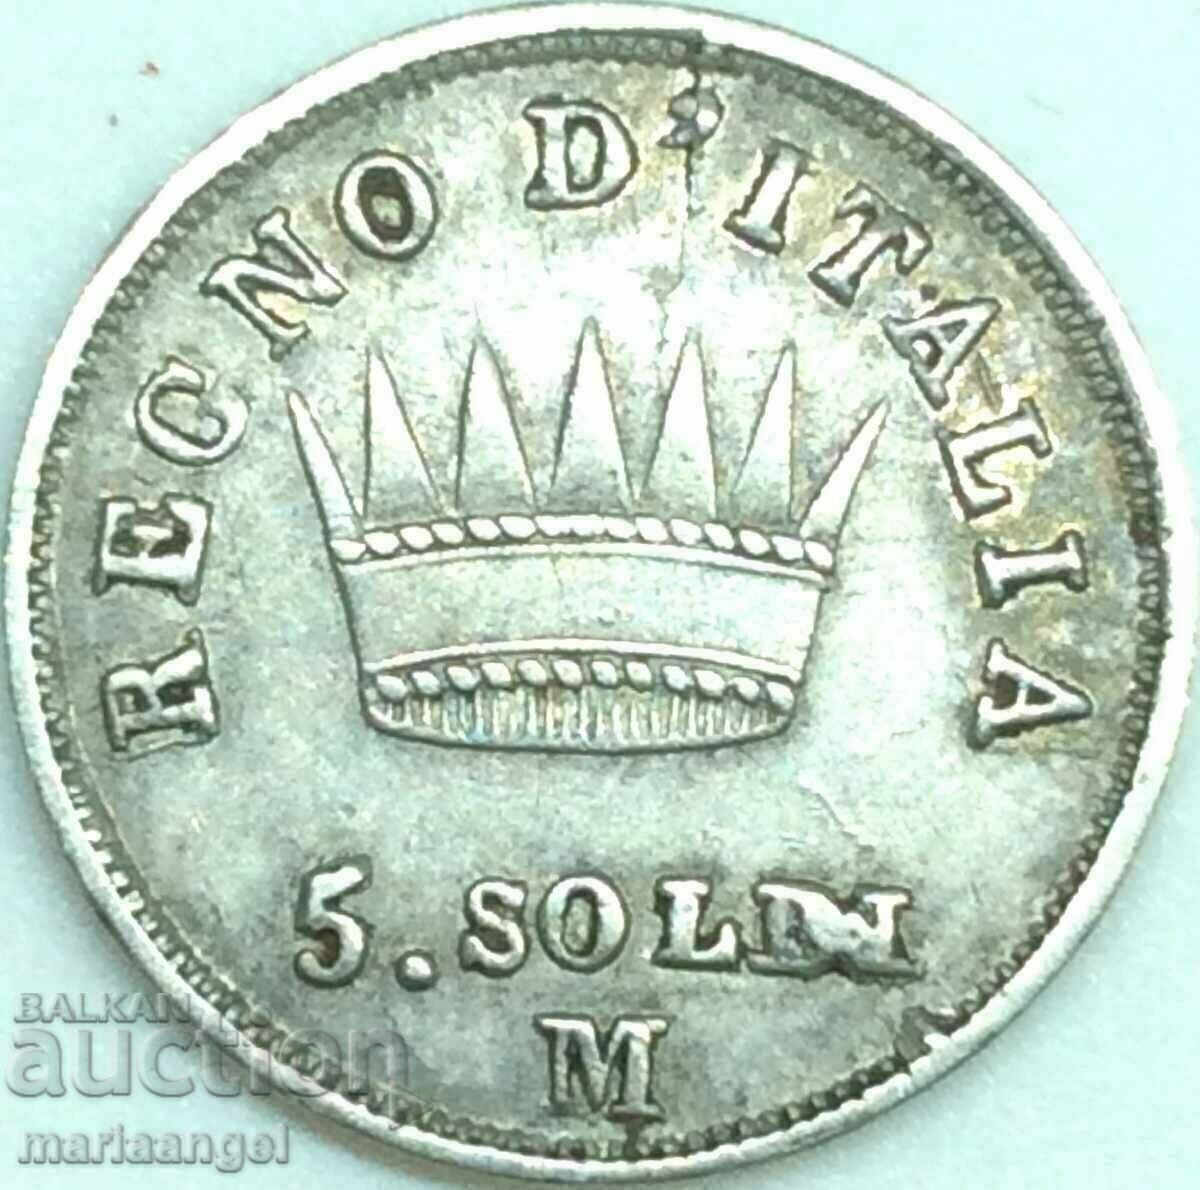 Napoleon 5 Soldi 1813 Italy M - Kingdom of Milan 1804-1814